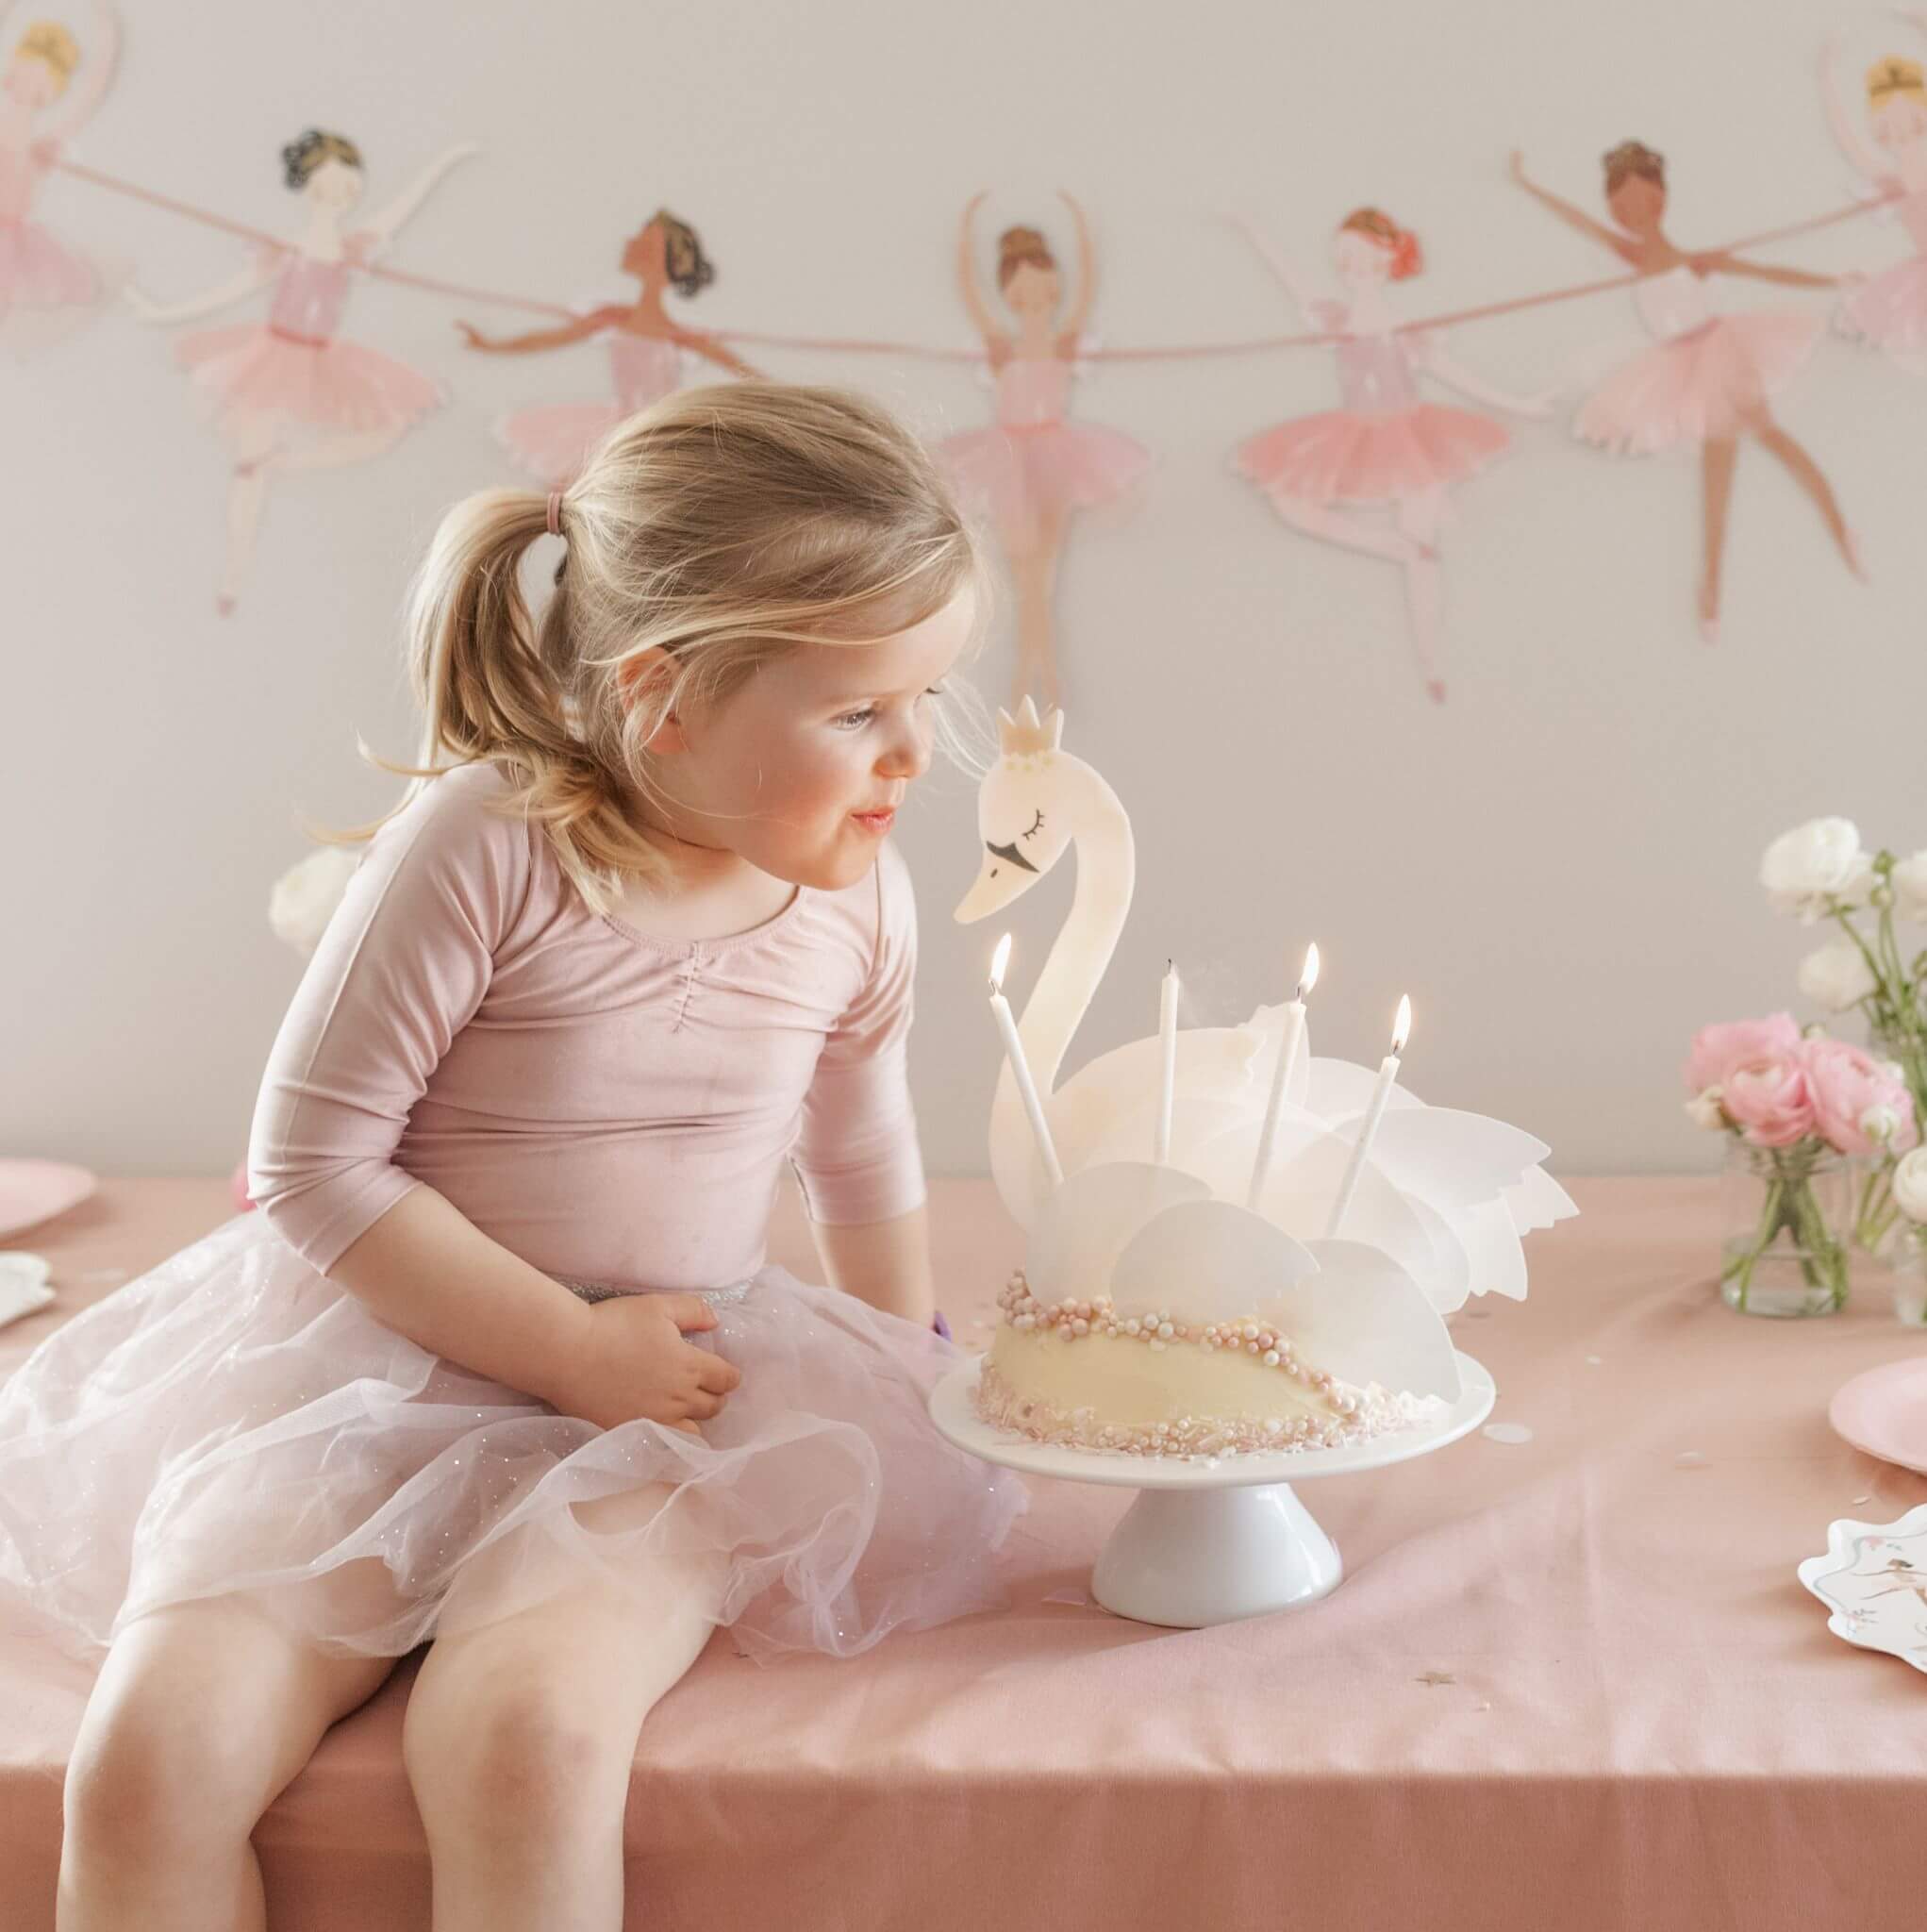 Cake Smash Photographer Mendham NJ: Princess Carriage Theme